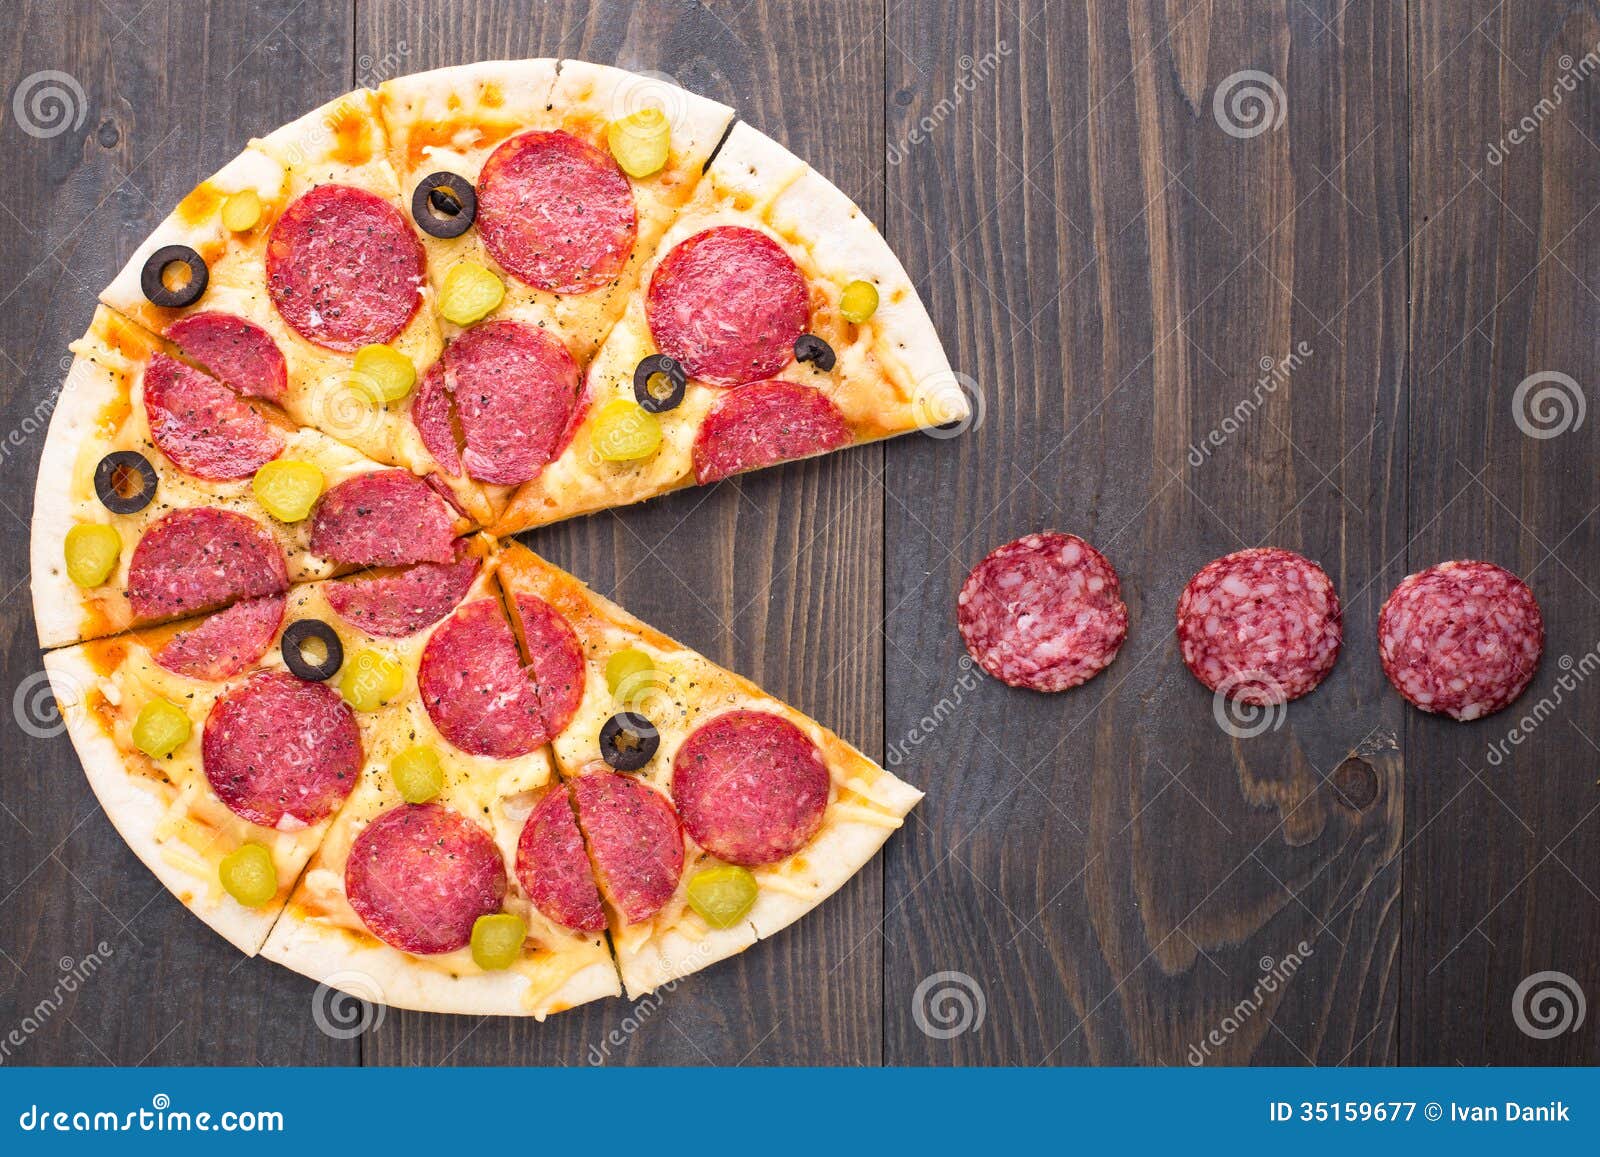 pacman-pizza-eatting-salami-table-35159677.jpg